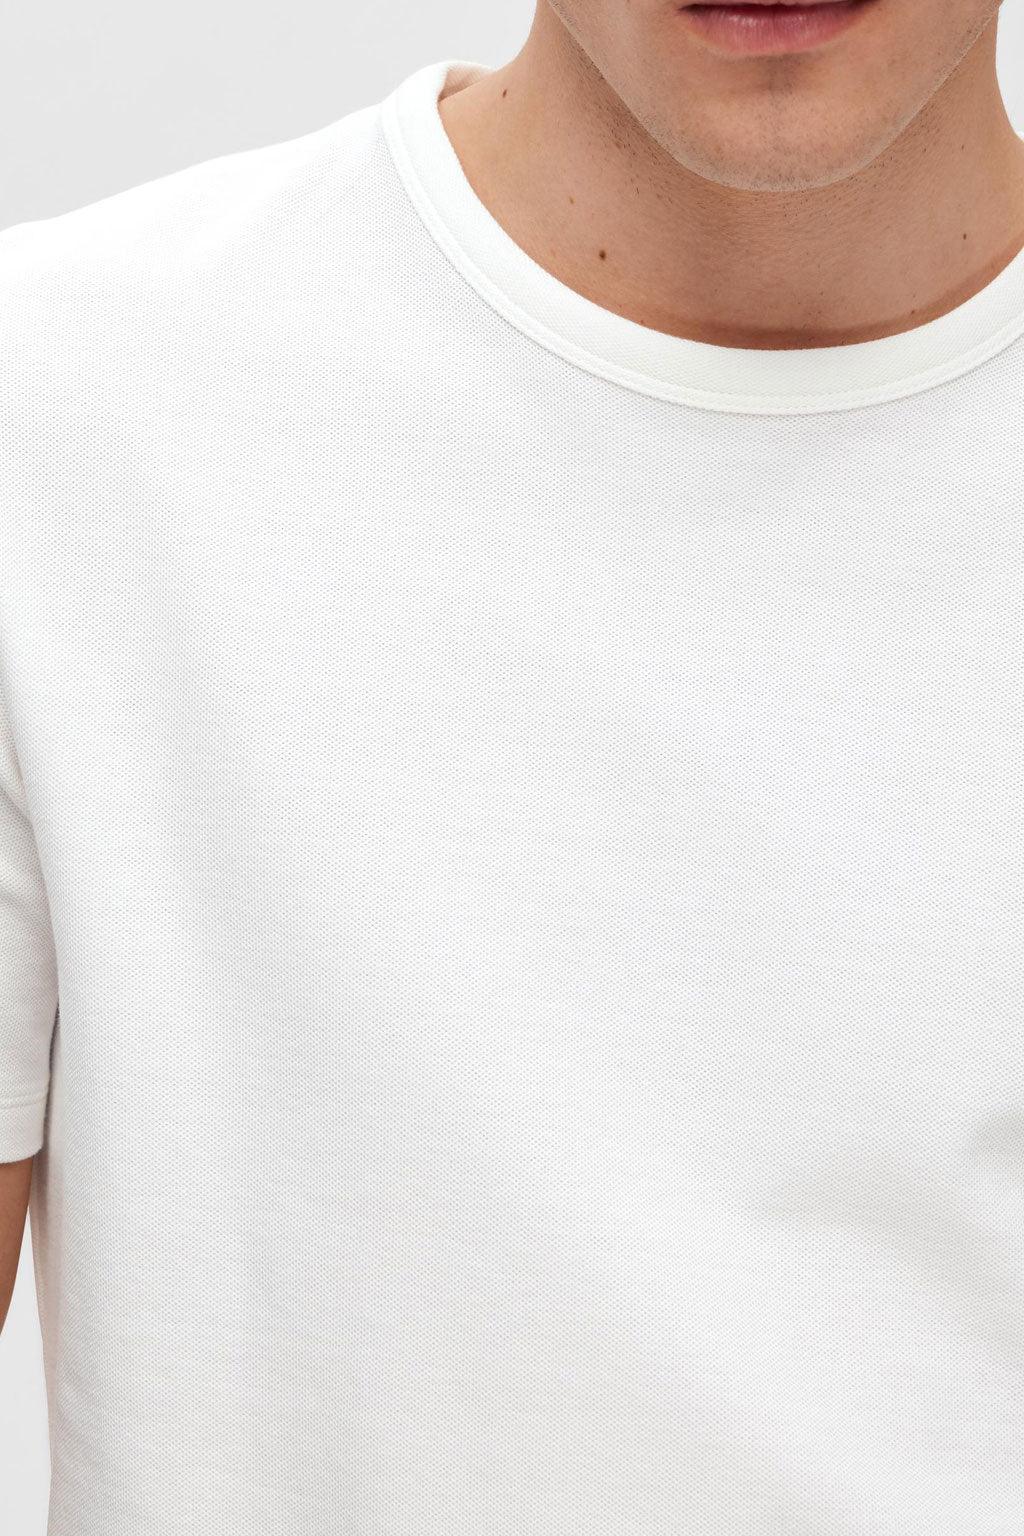 Selected t-shirt - Big Boss | the menswear concept